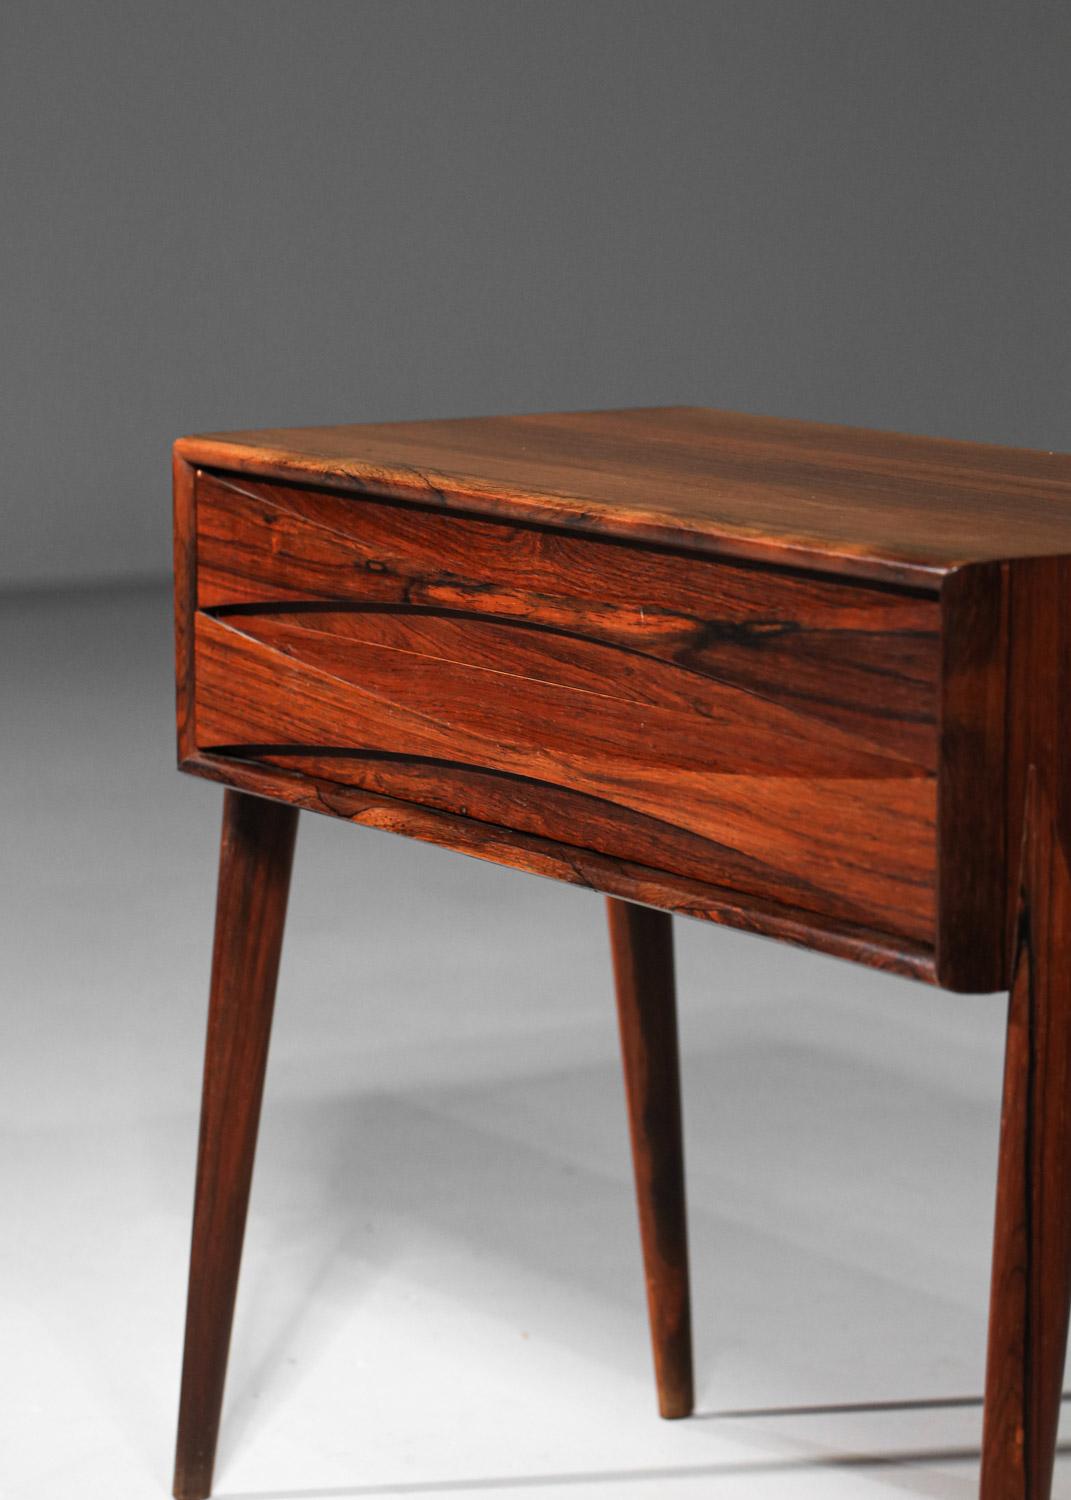 Danish rare Scandinavian solid wood night table by Arne vodder danish 1960's For Sale